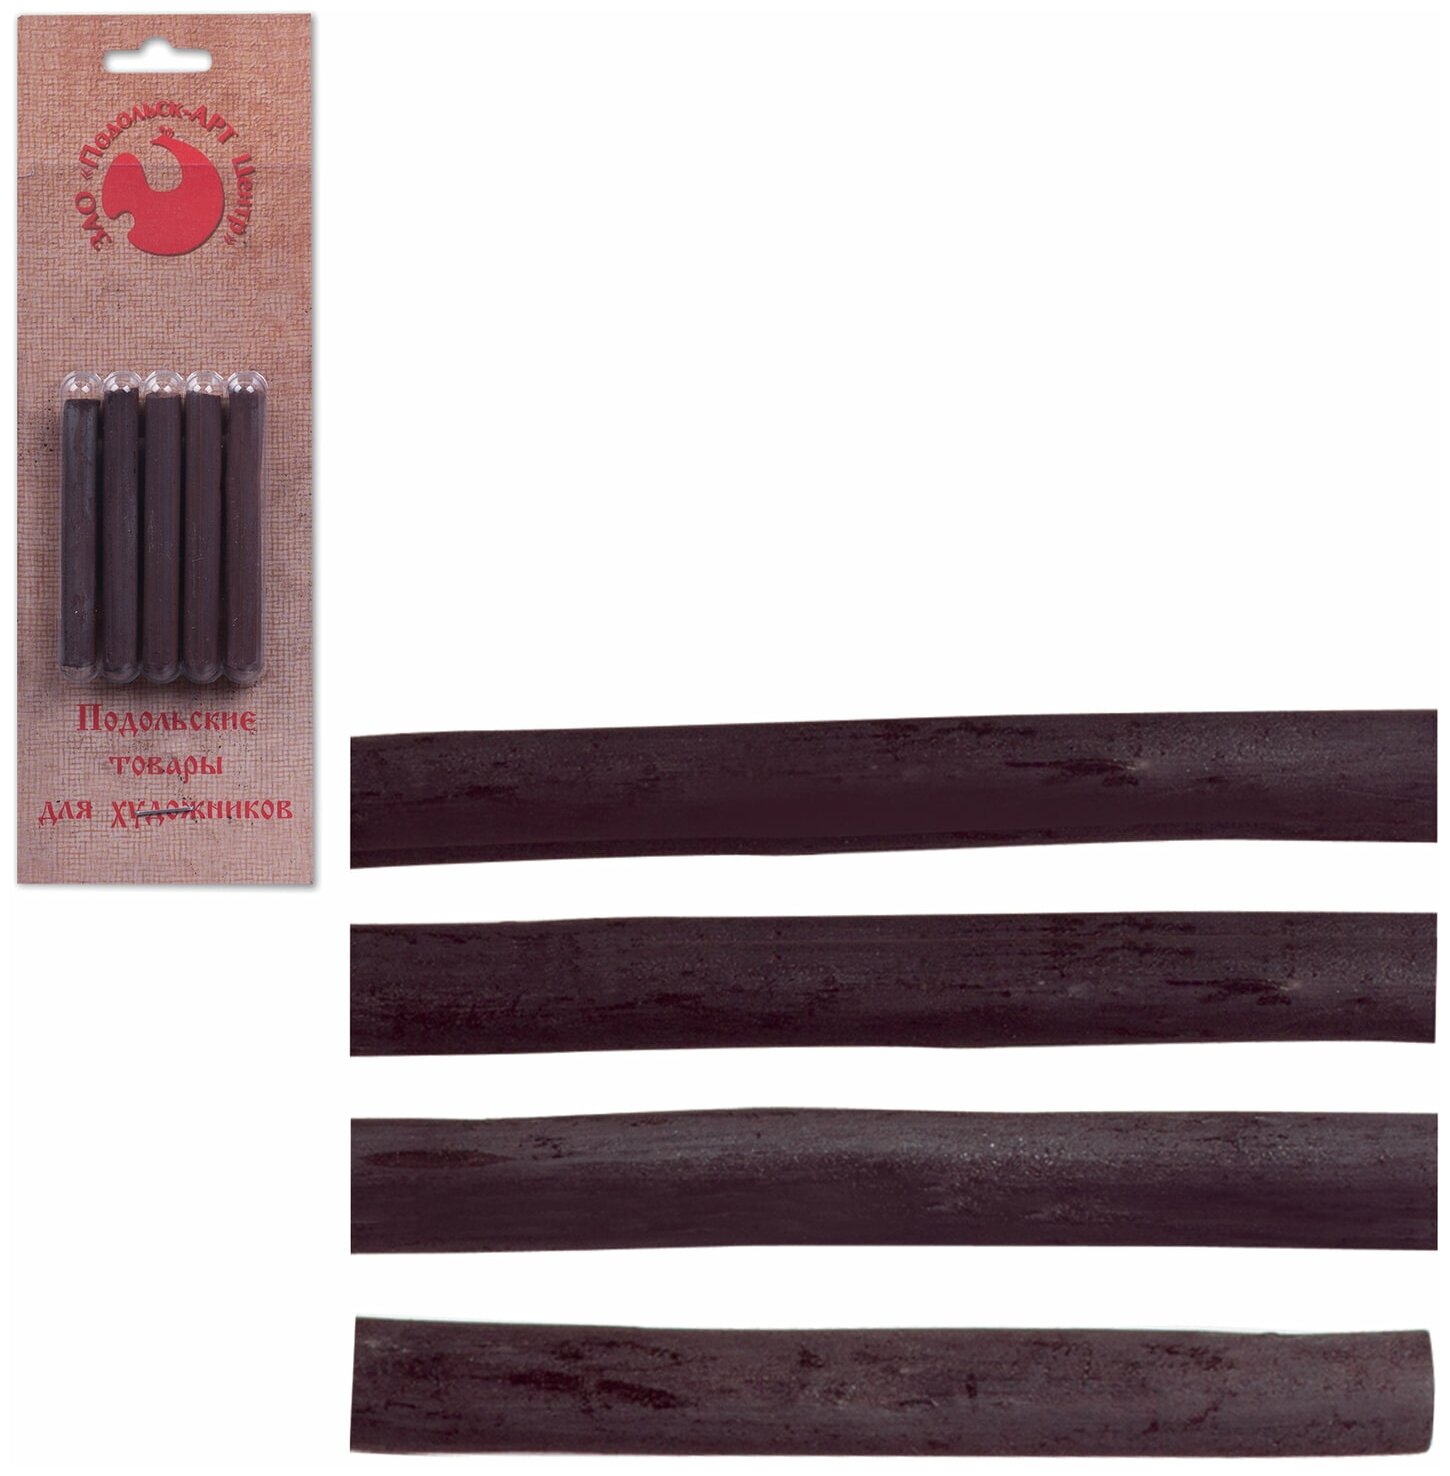 Сепия темная набор 5 карандашей блистер